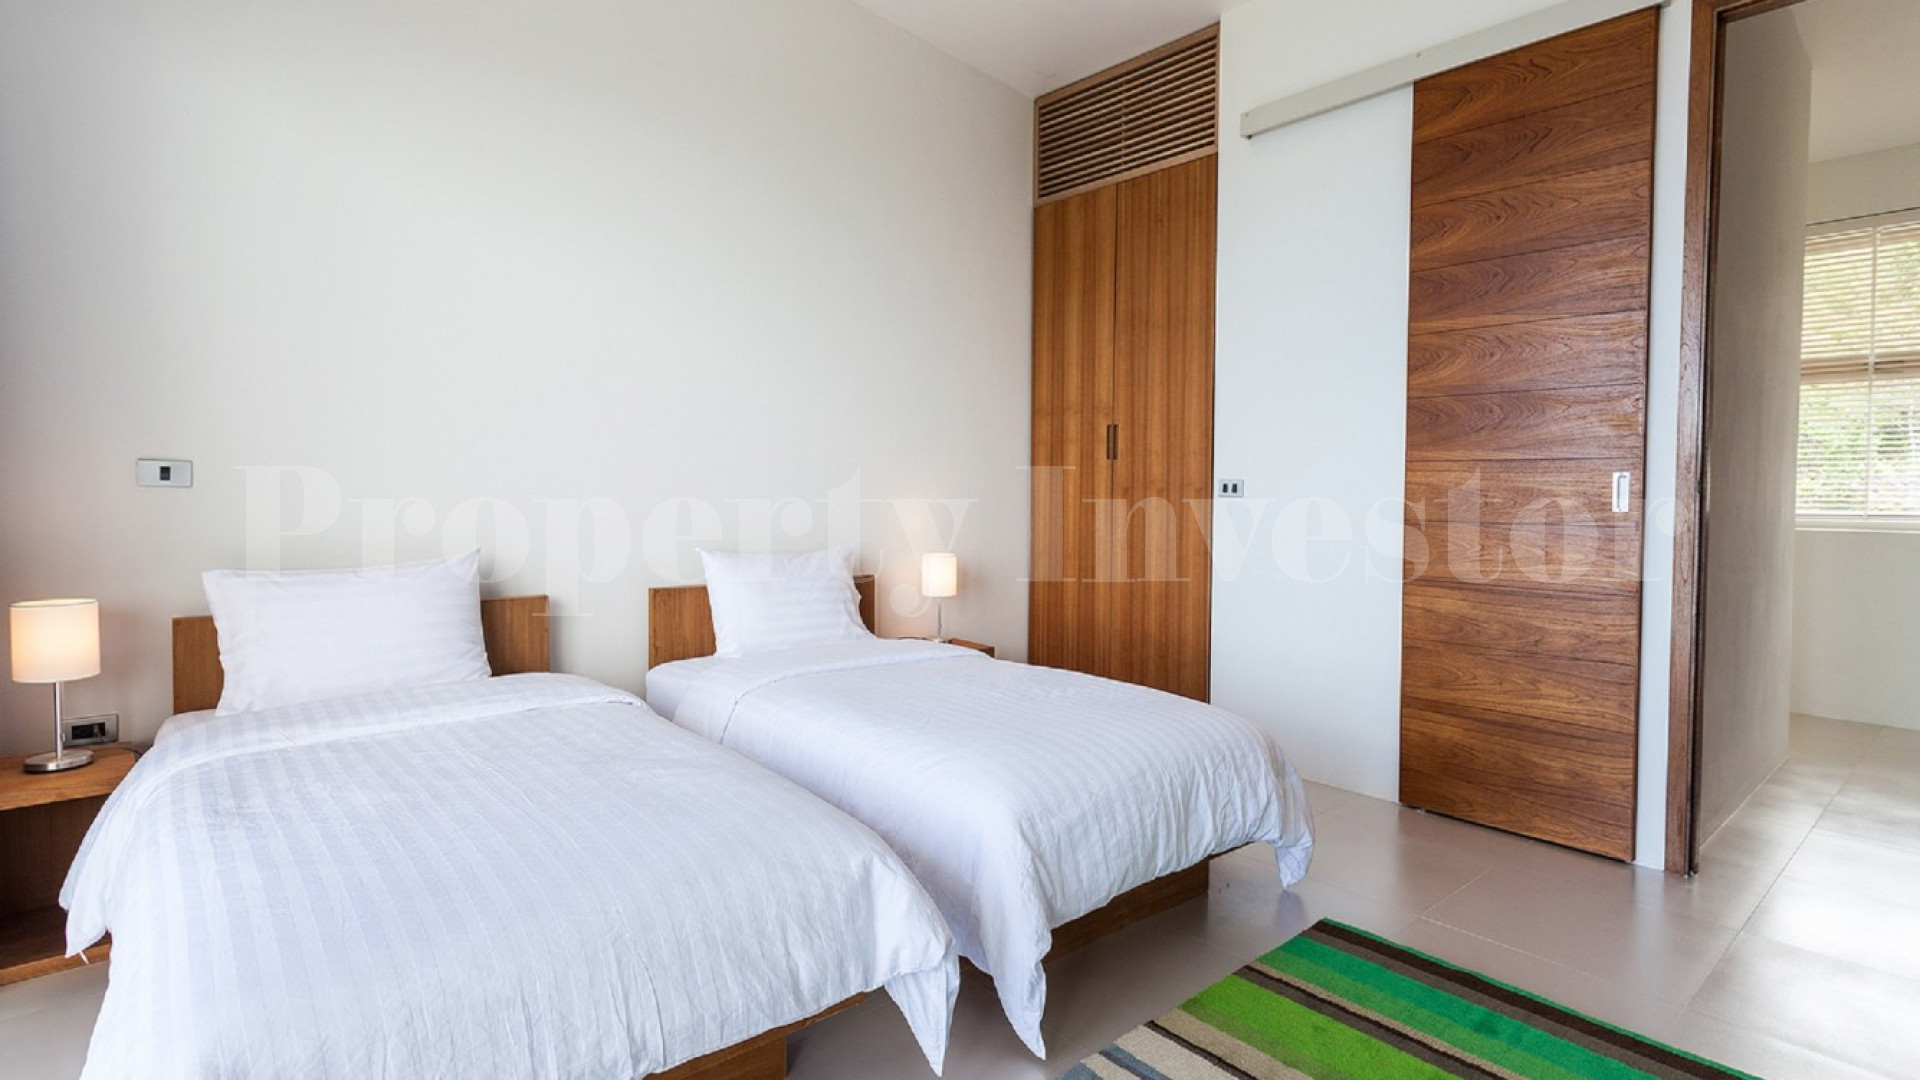 Spacious 3 Bedroom Luxury Seaview Resort Community Villa for Sale on Koh Phangan, Thailand